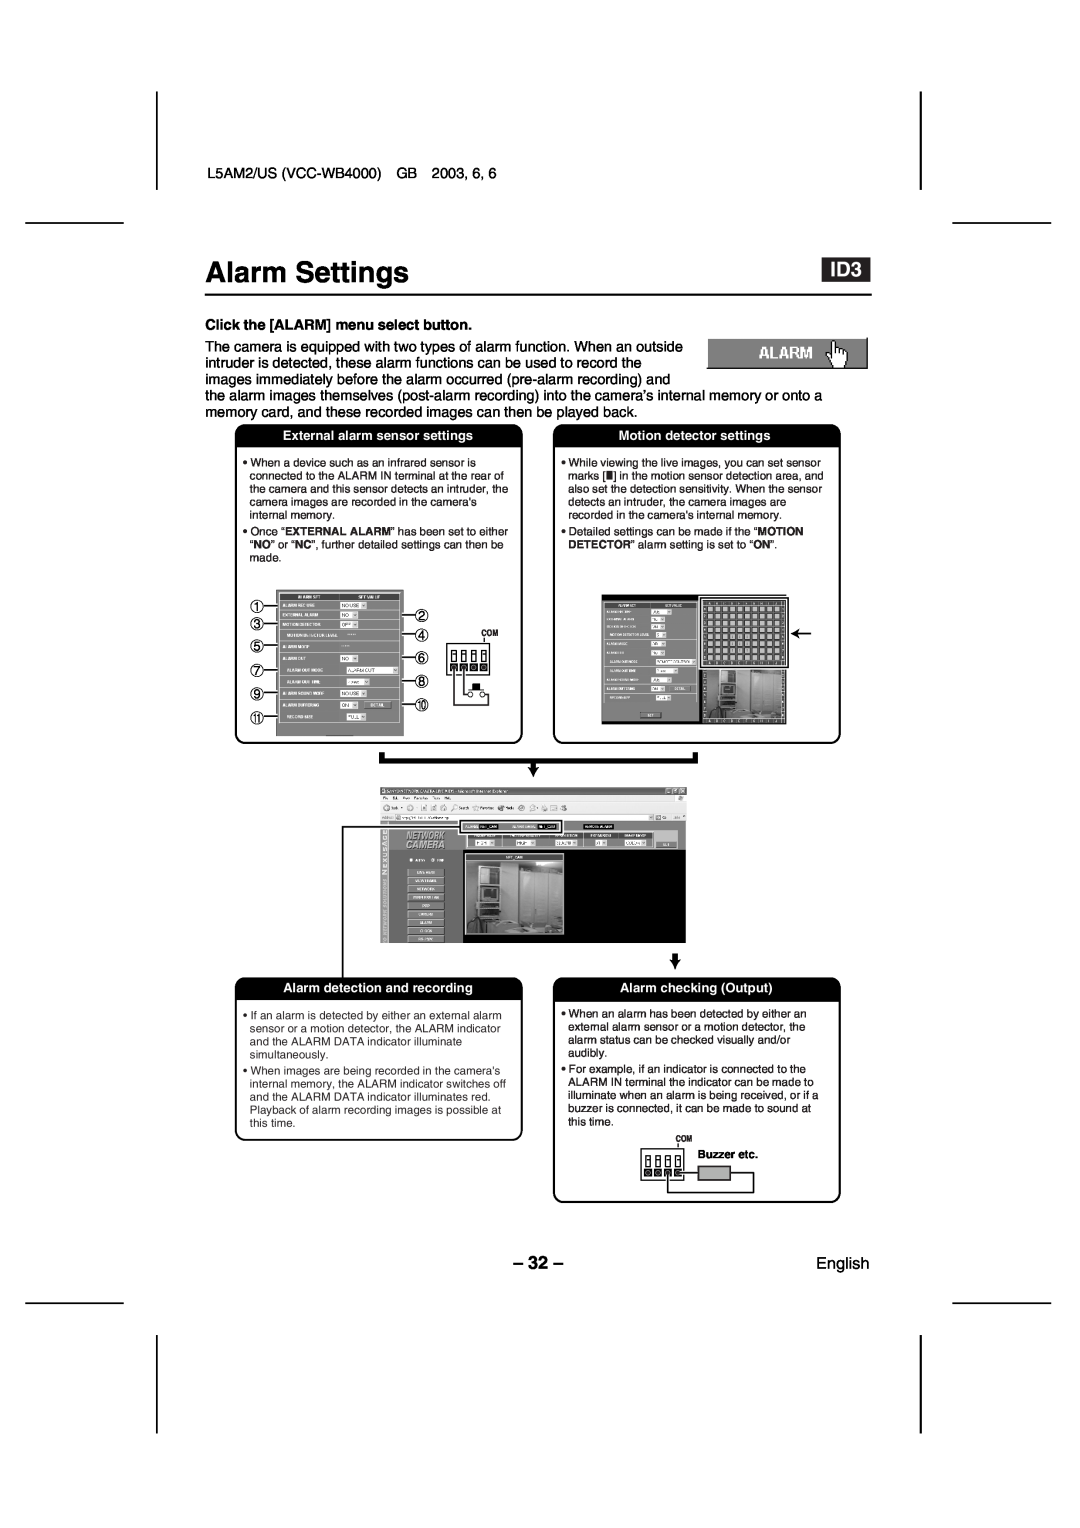 Sanyo VCC-WB4000 Alarm Settings, Click the ALARM menu select button, External alarm sensor settings, Alarm checking Output 